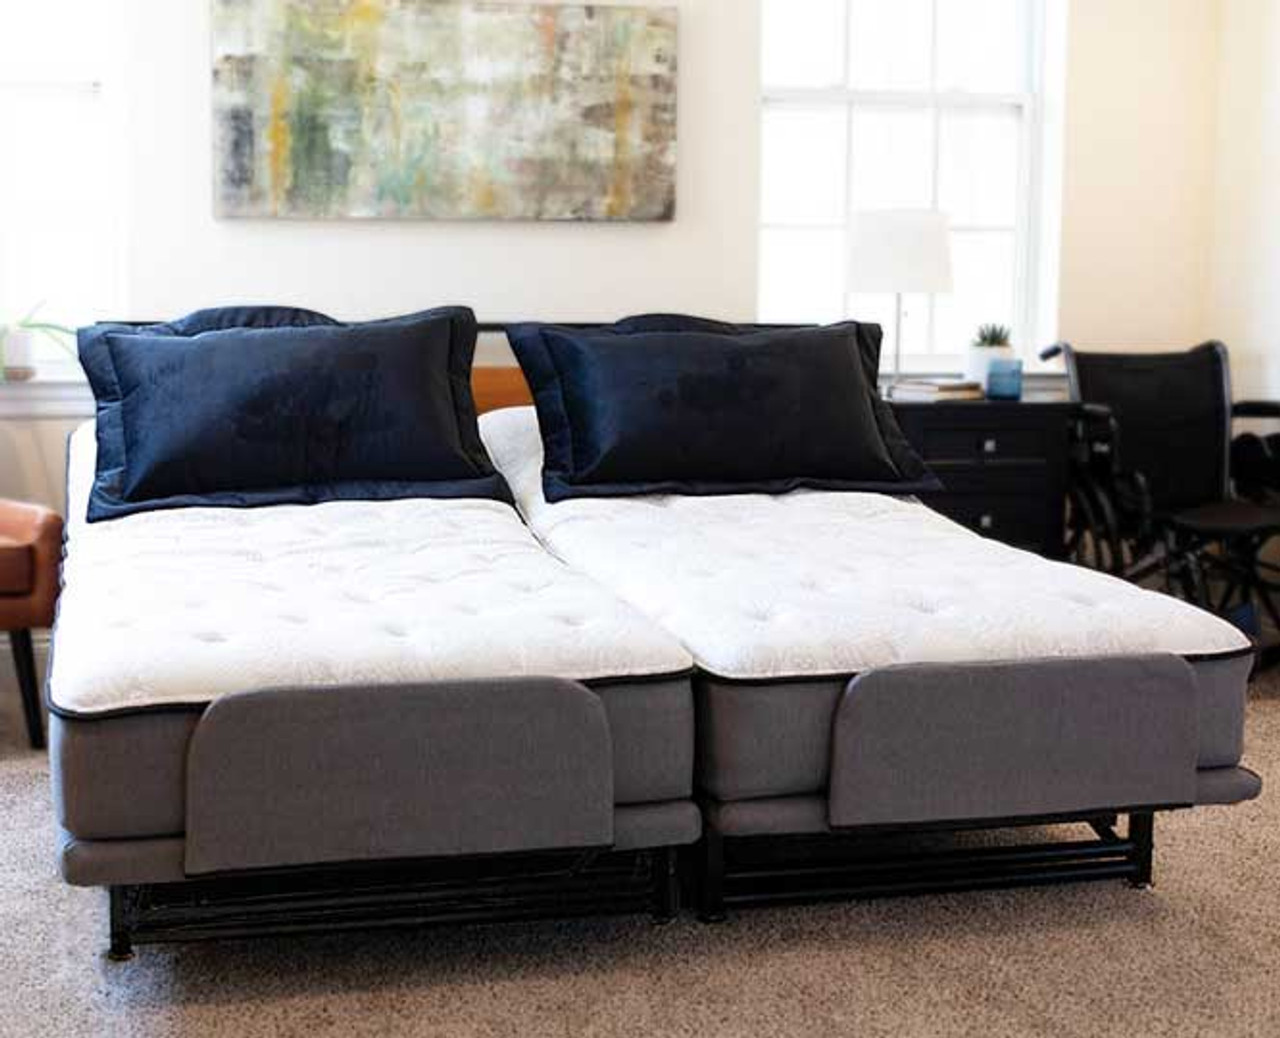 queen bed split mattress